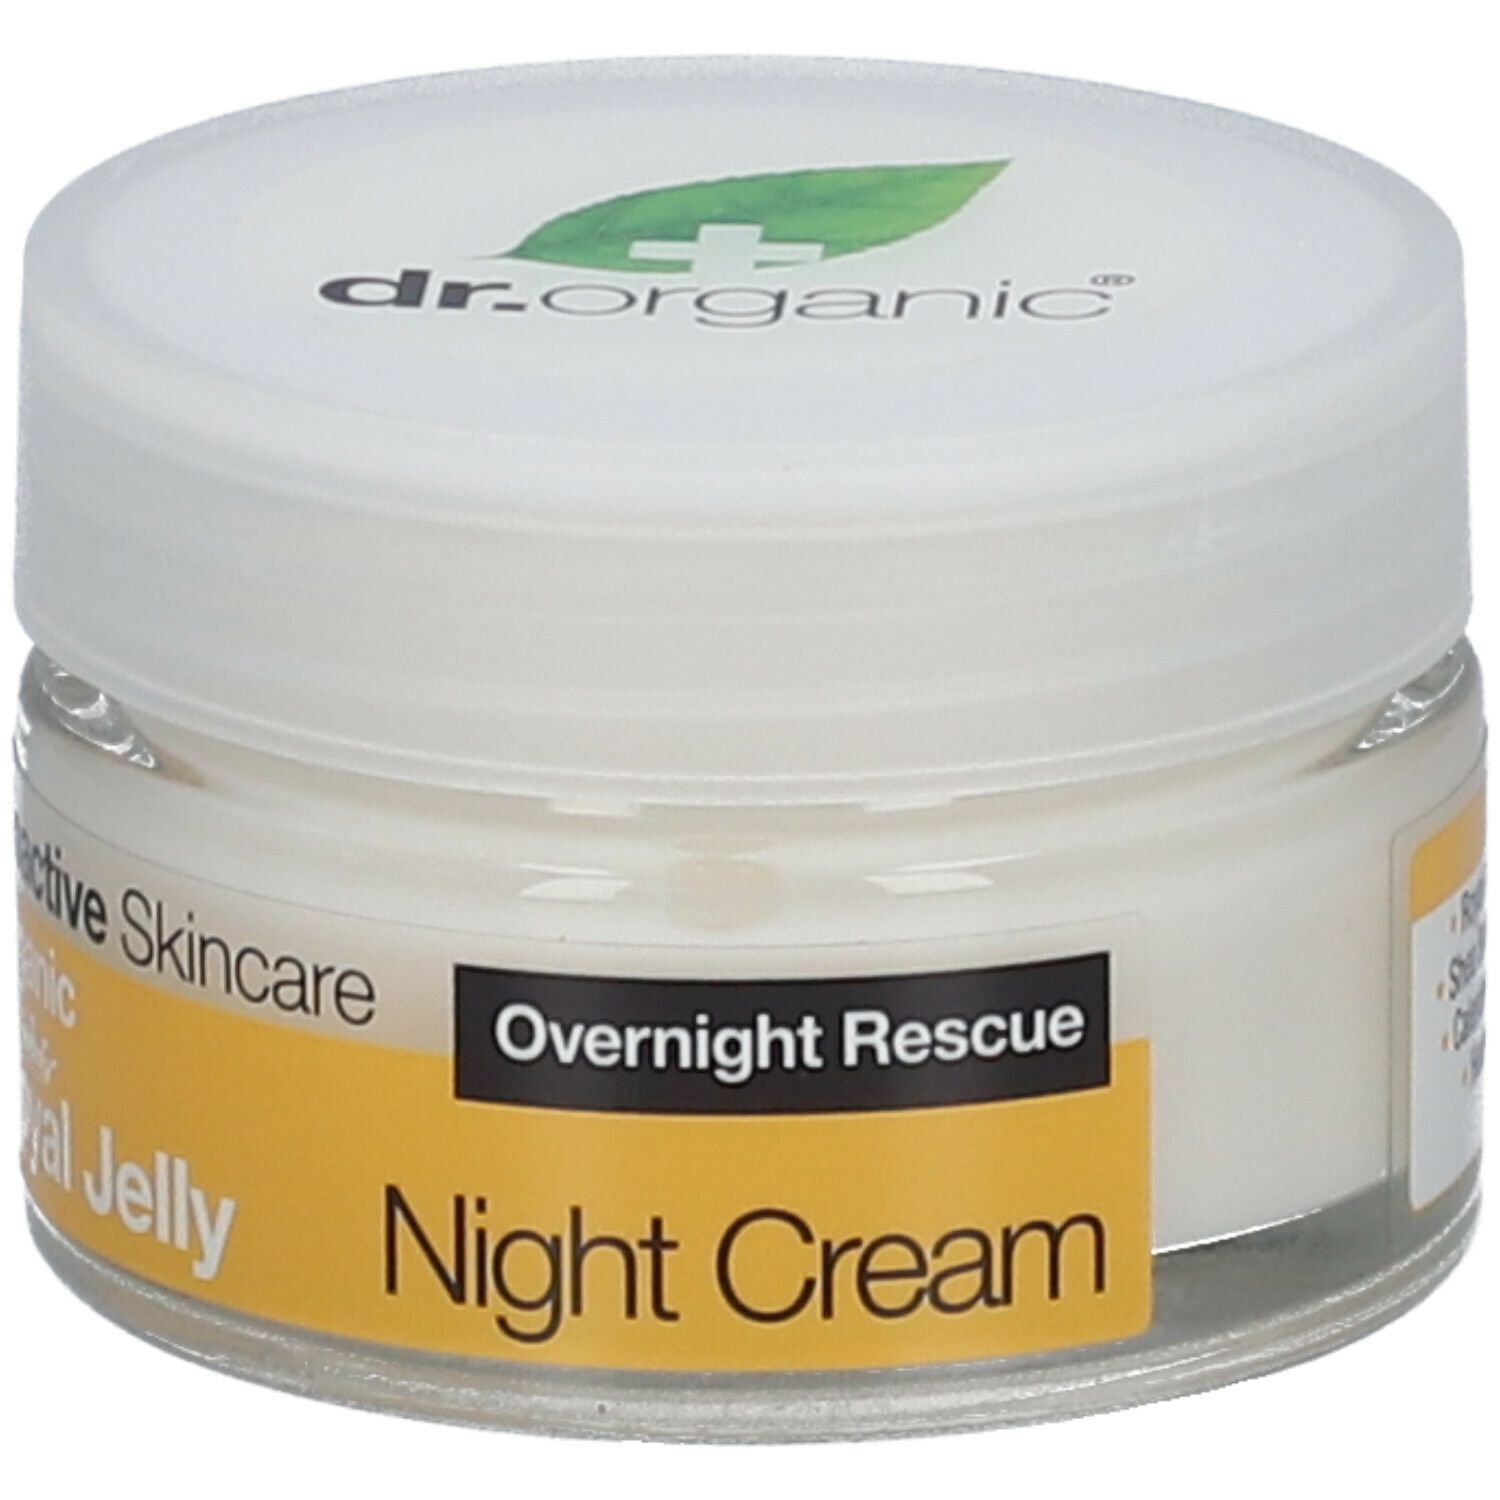 Dr. Organic® Royal Jelly Night Cream